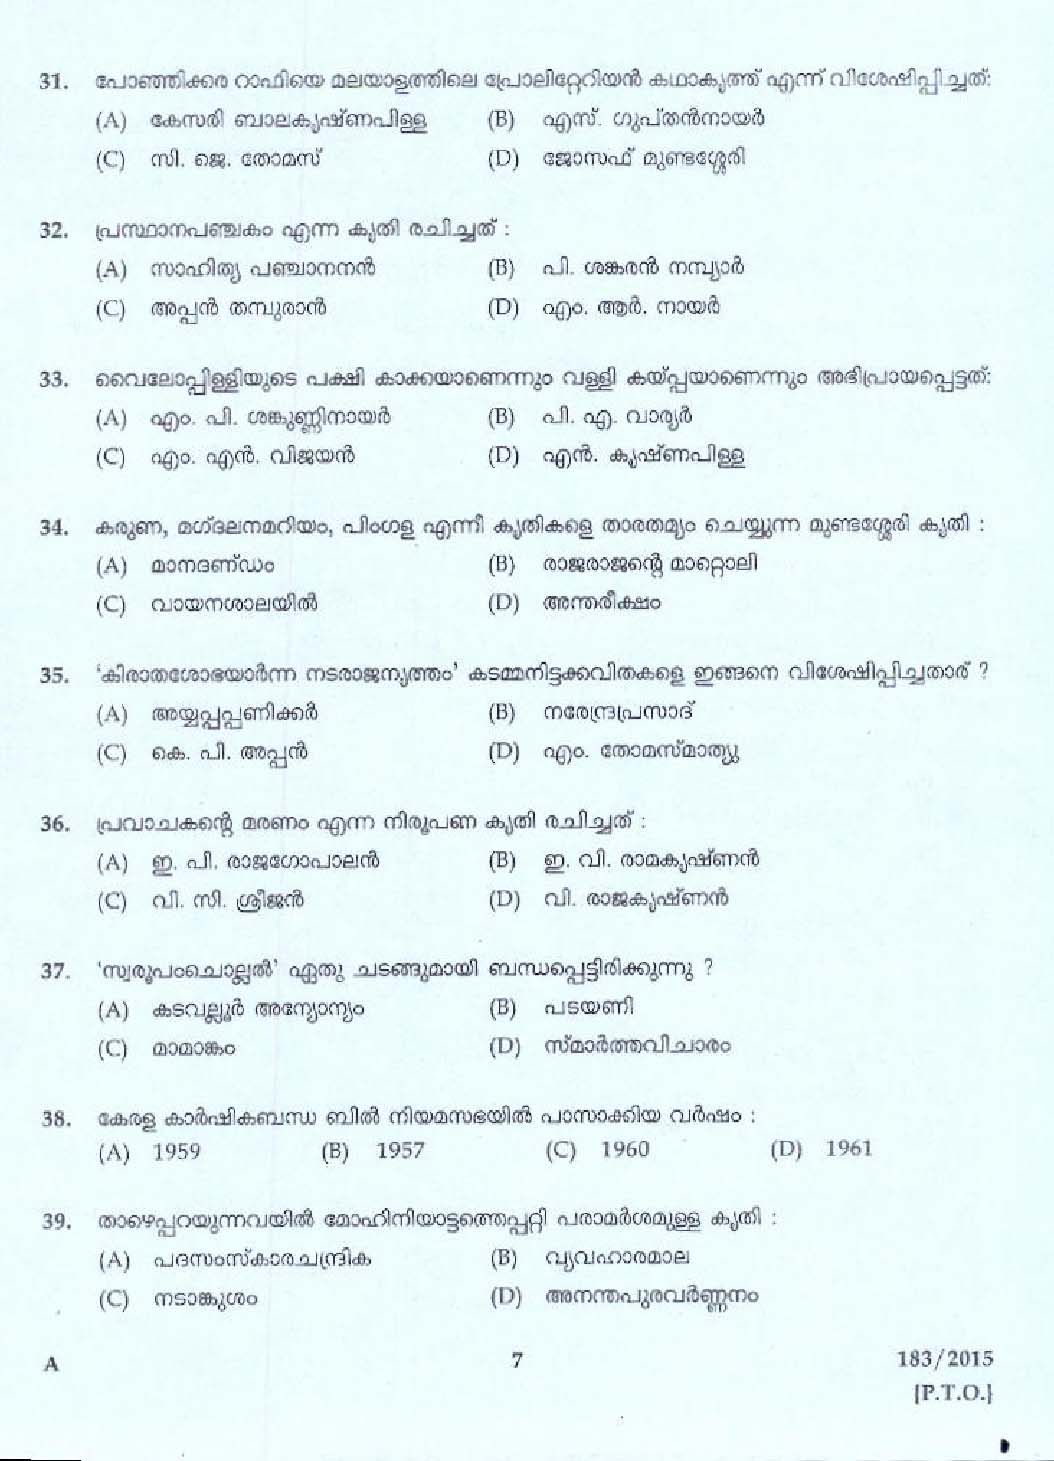 KPSC Lecturer in Malayalam Exam 2015 Code 1832015 5